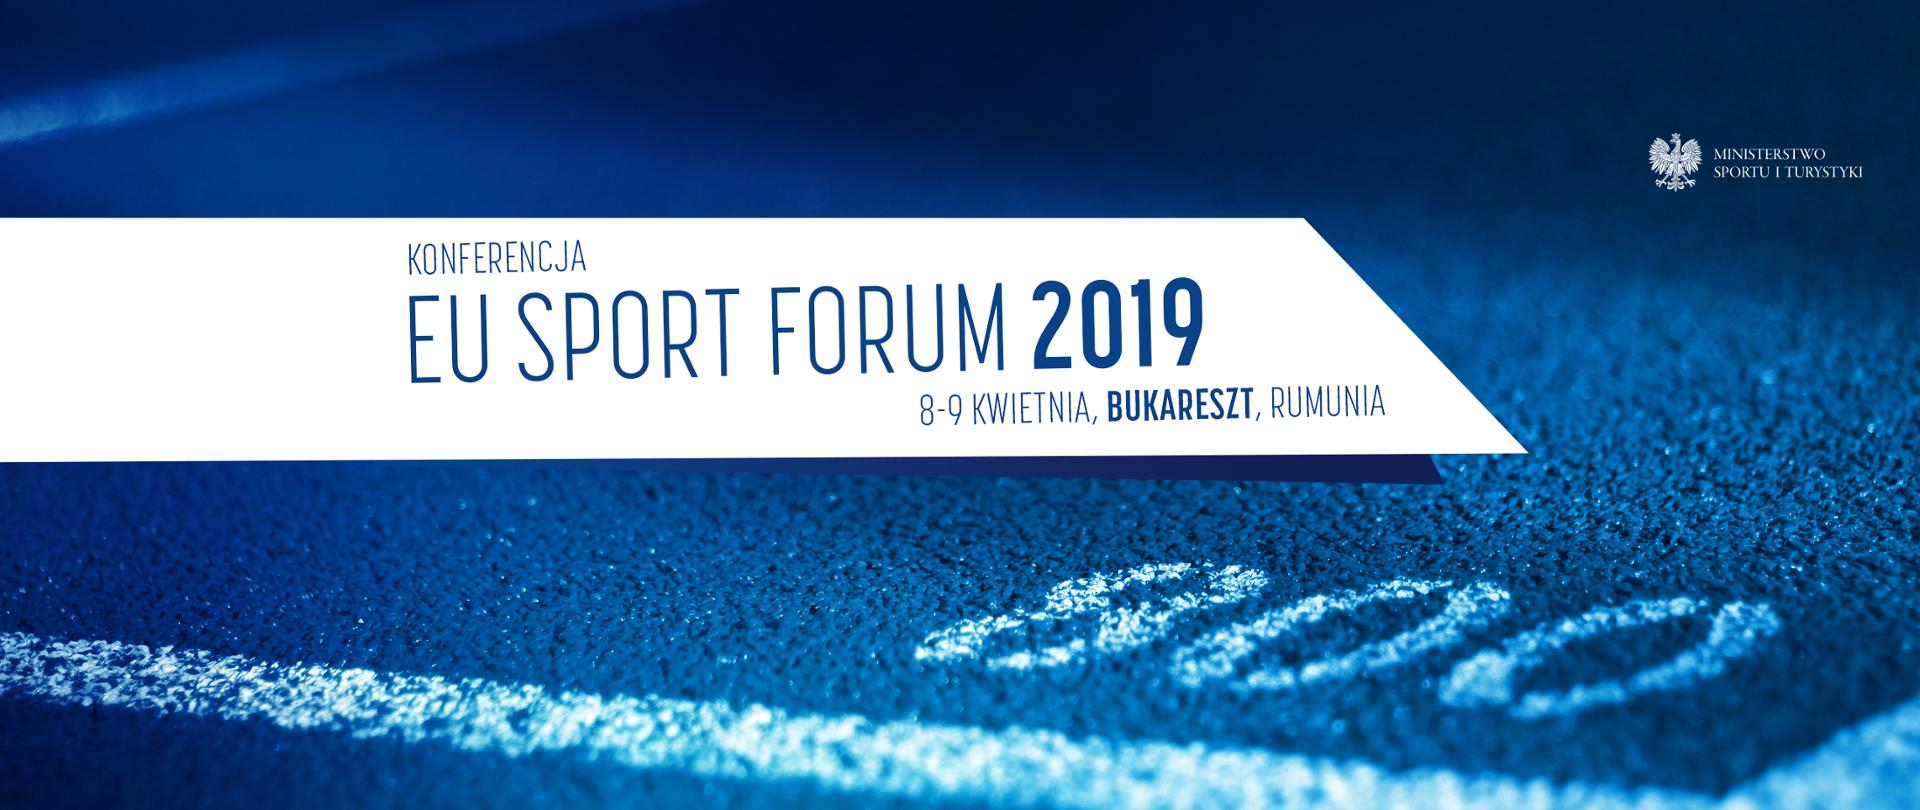 Konferencja EU Sport Forum 2019